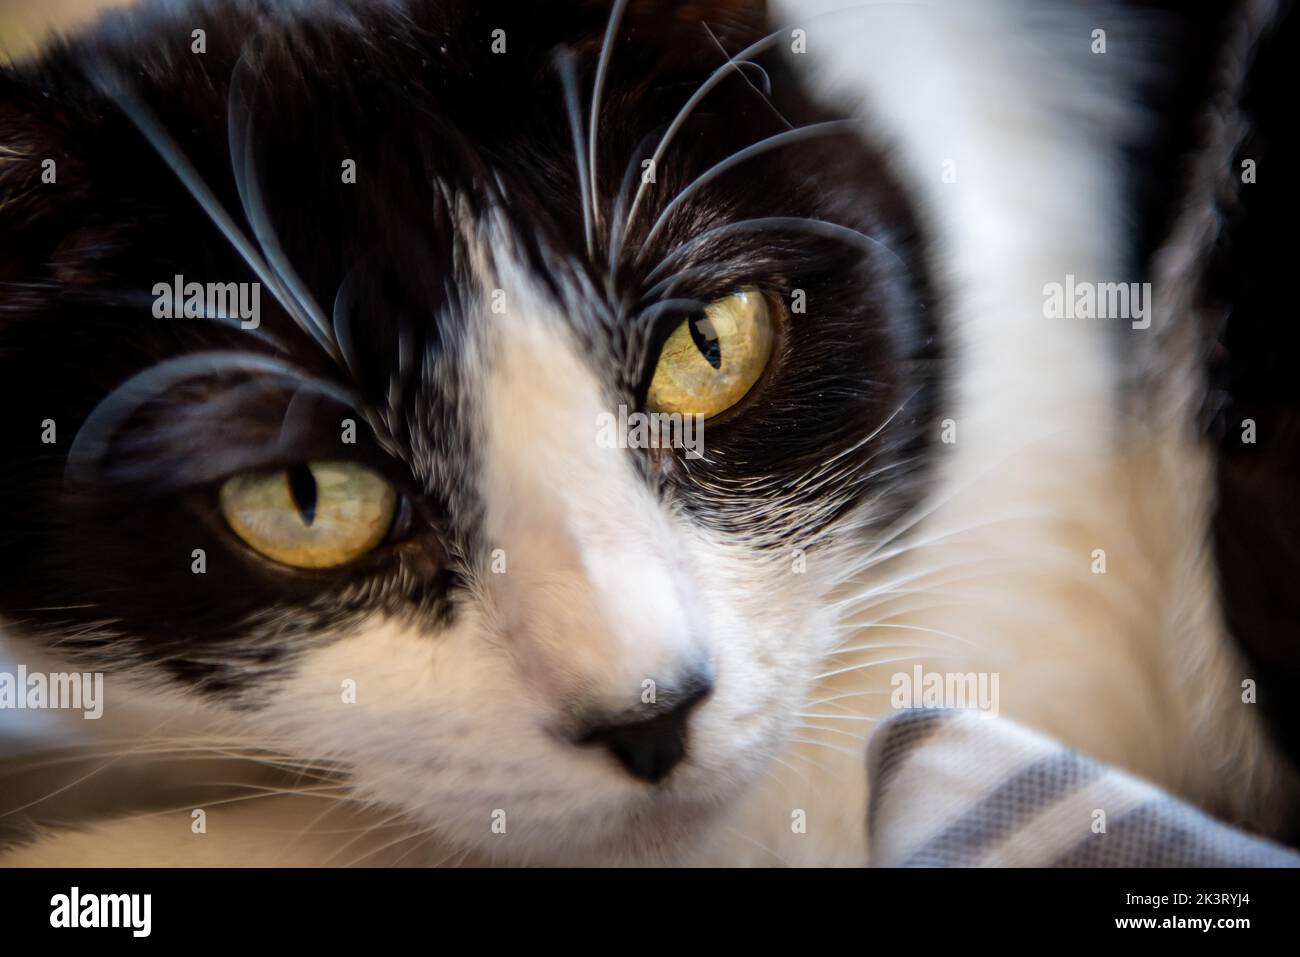 Domestic cat close up Stock Photo